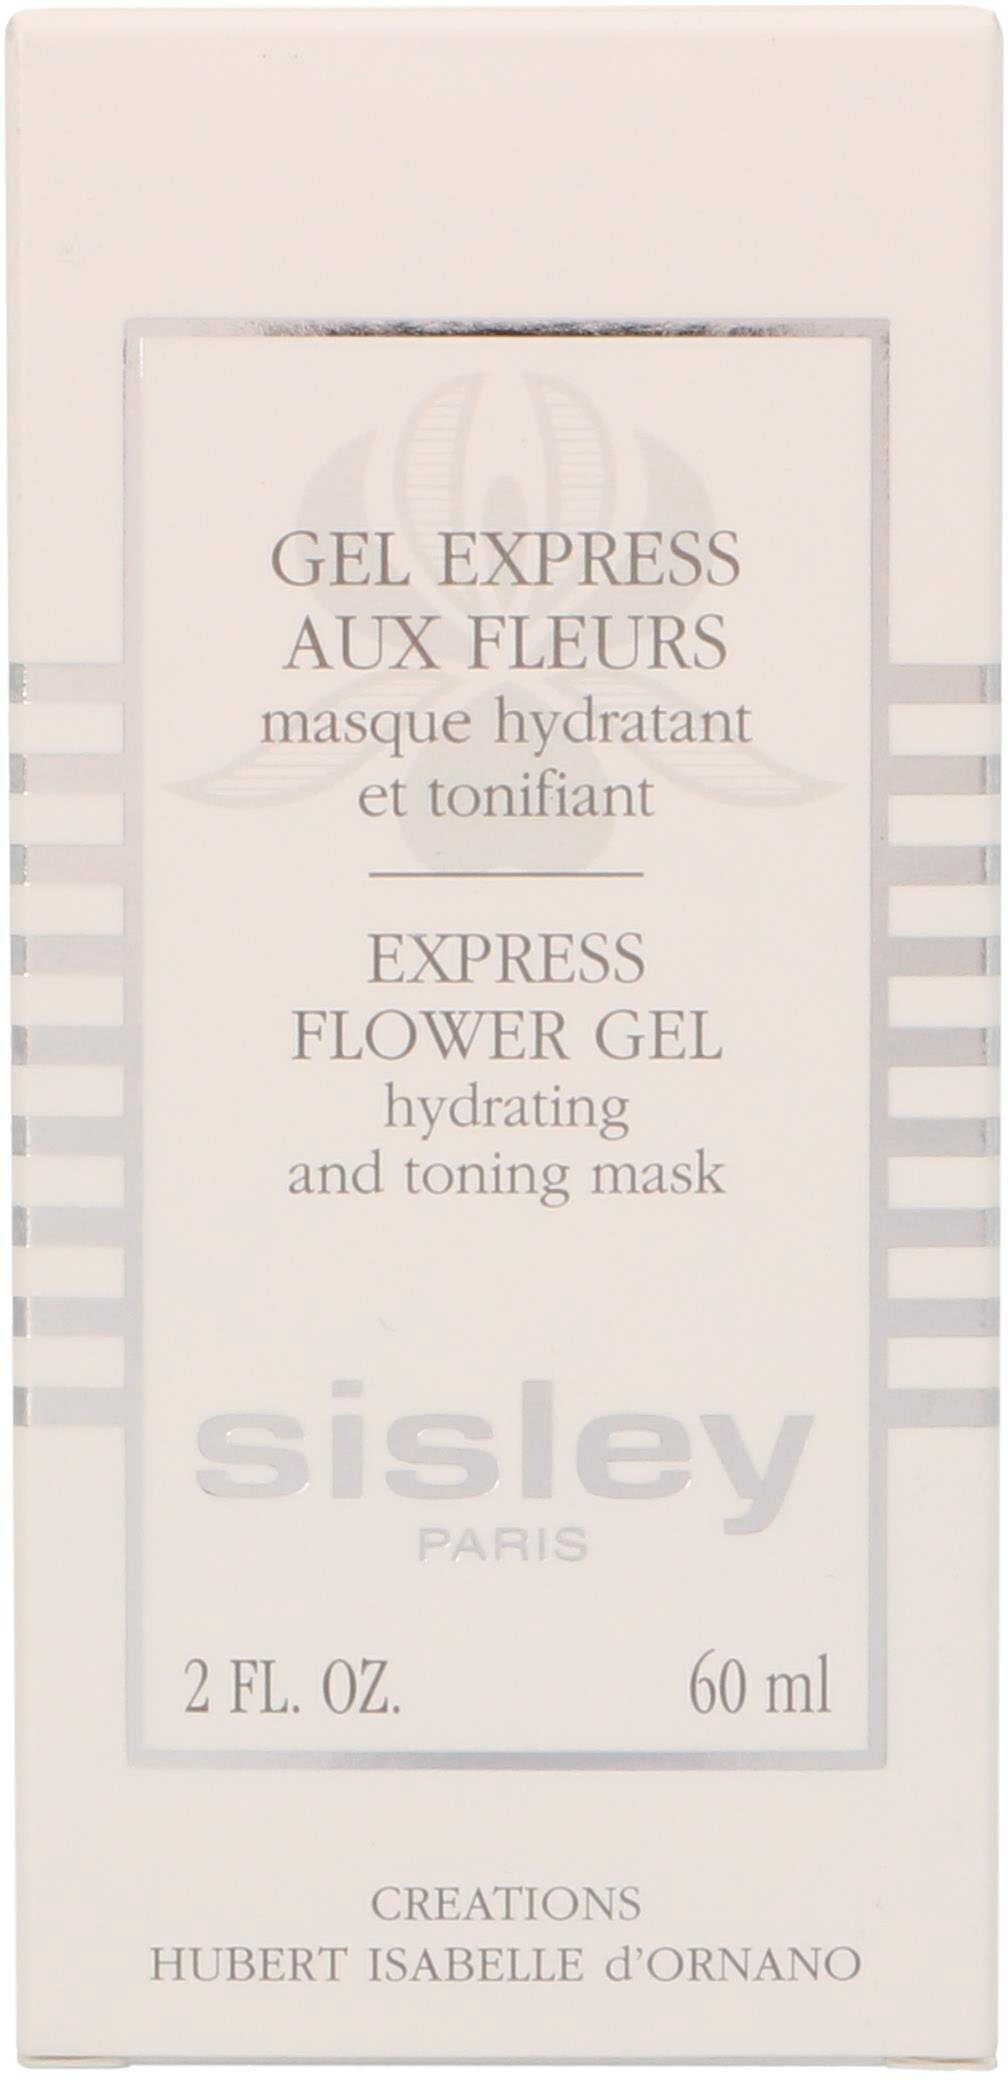 Gel Express Gesichtsgel Flower sisley